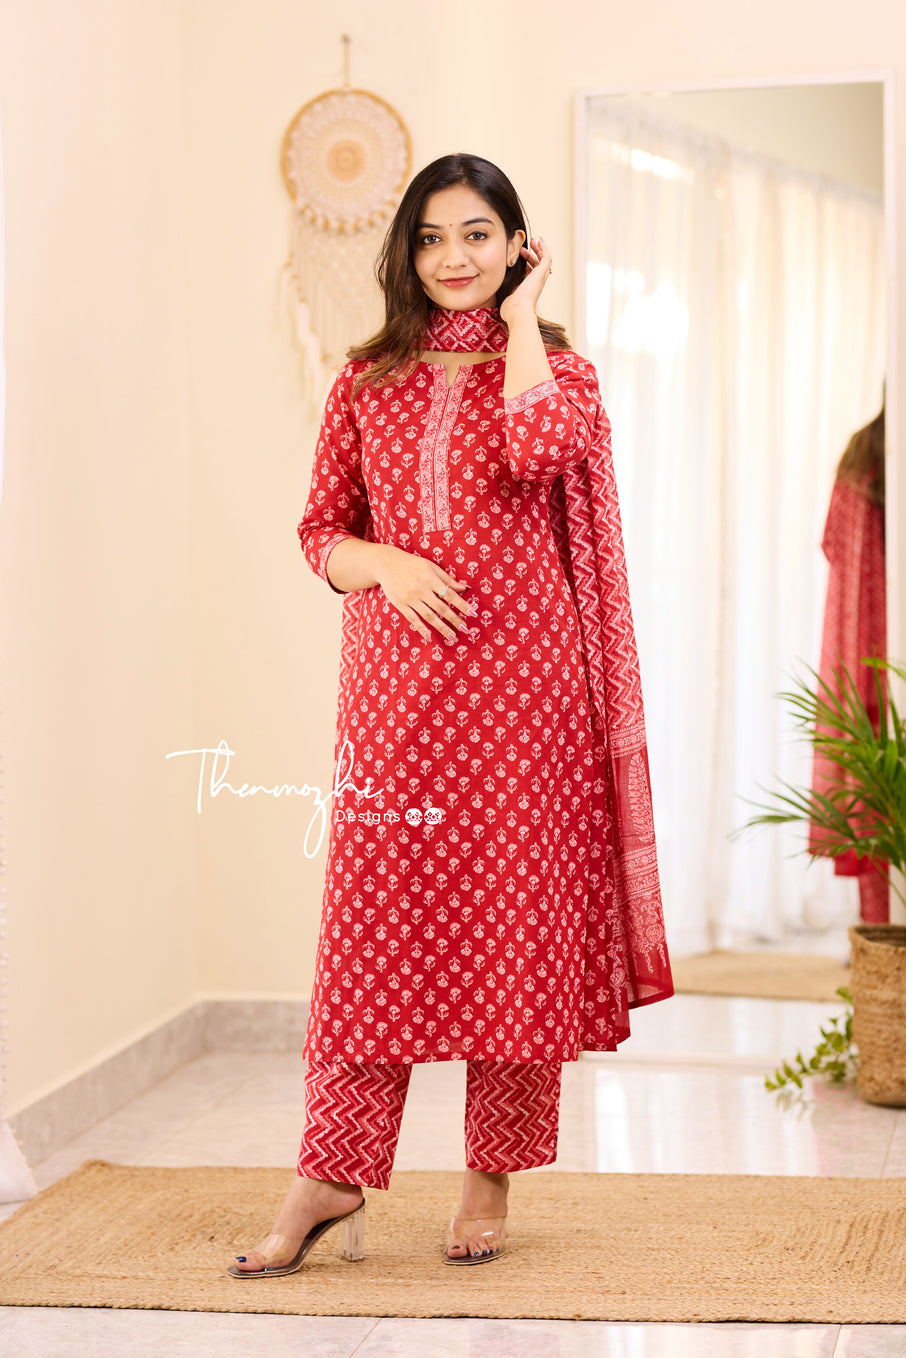 50 Latest Design of Patiala Salwar Suit Design (2022) - Tips and Beauty |  Suit designs, Ladies tops fashion, Punjabi suits party wear